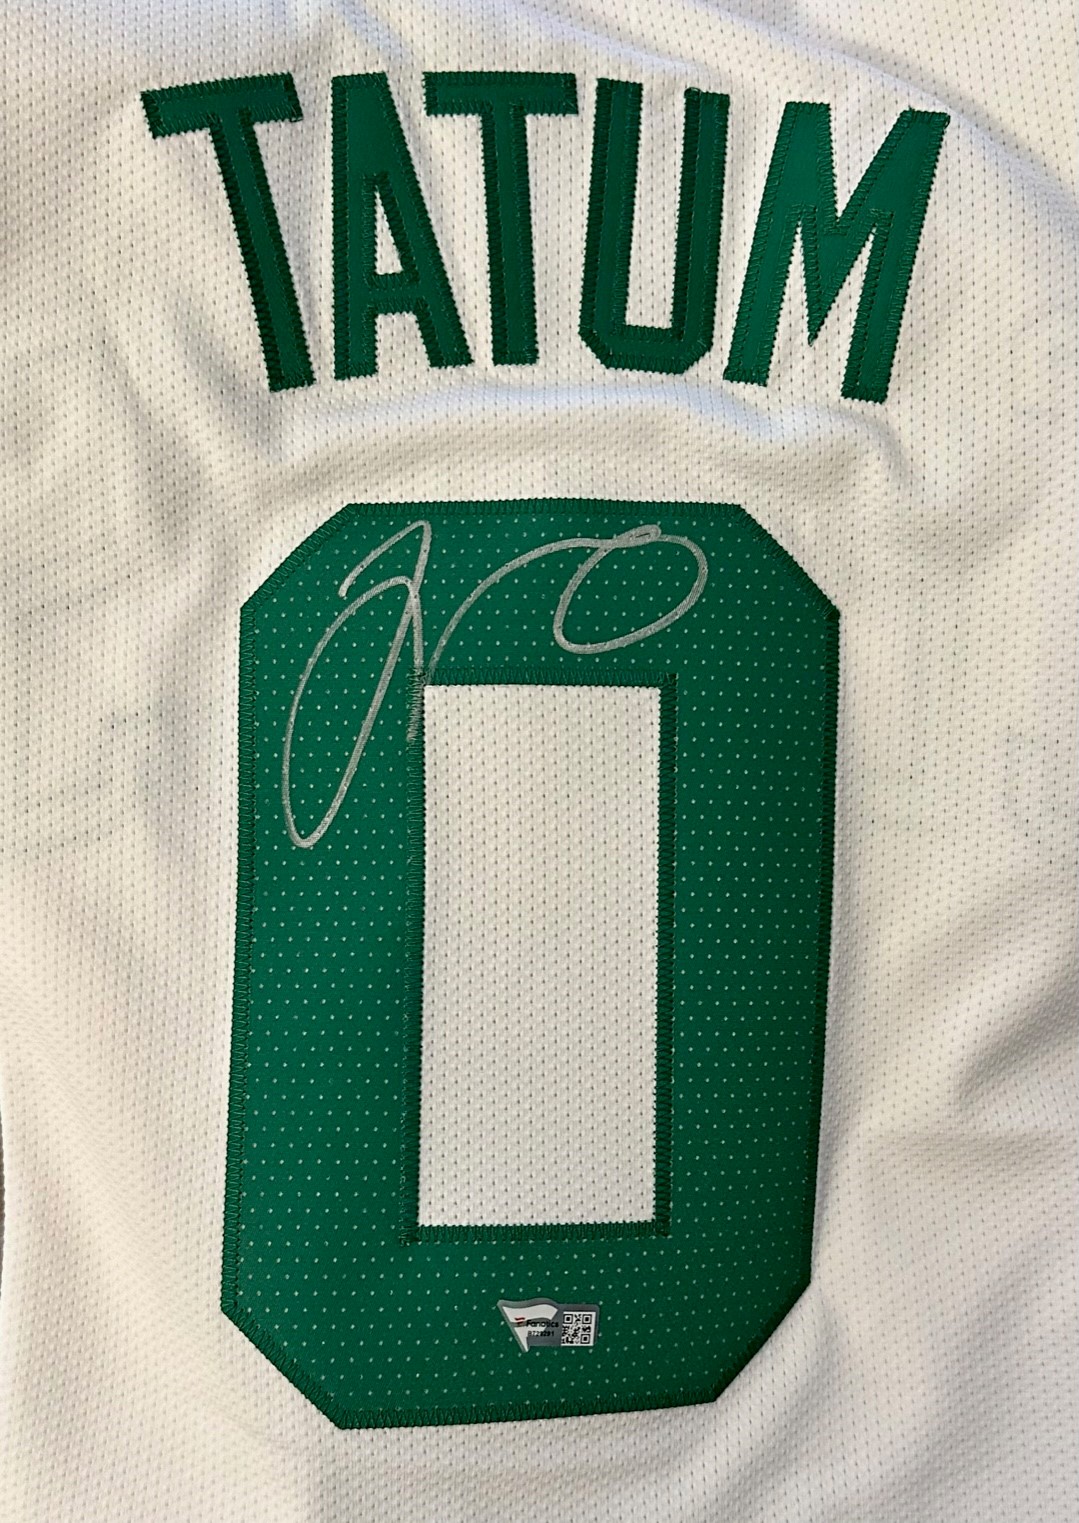 Fanatics Authentic Jayson Tatum Boston Celtics Autographed Green Nike Authentic Jersey